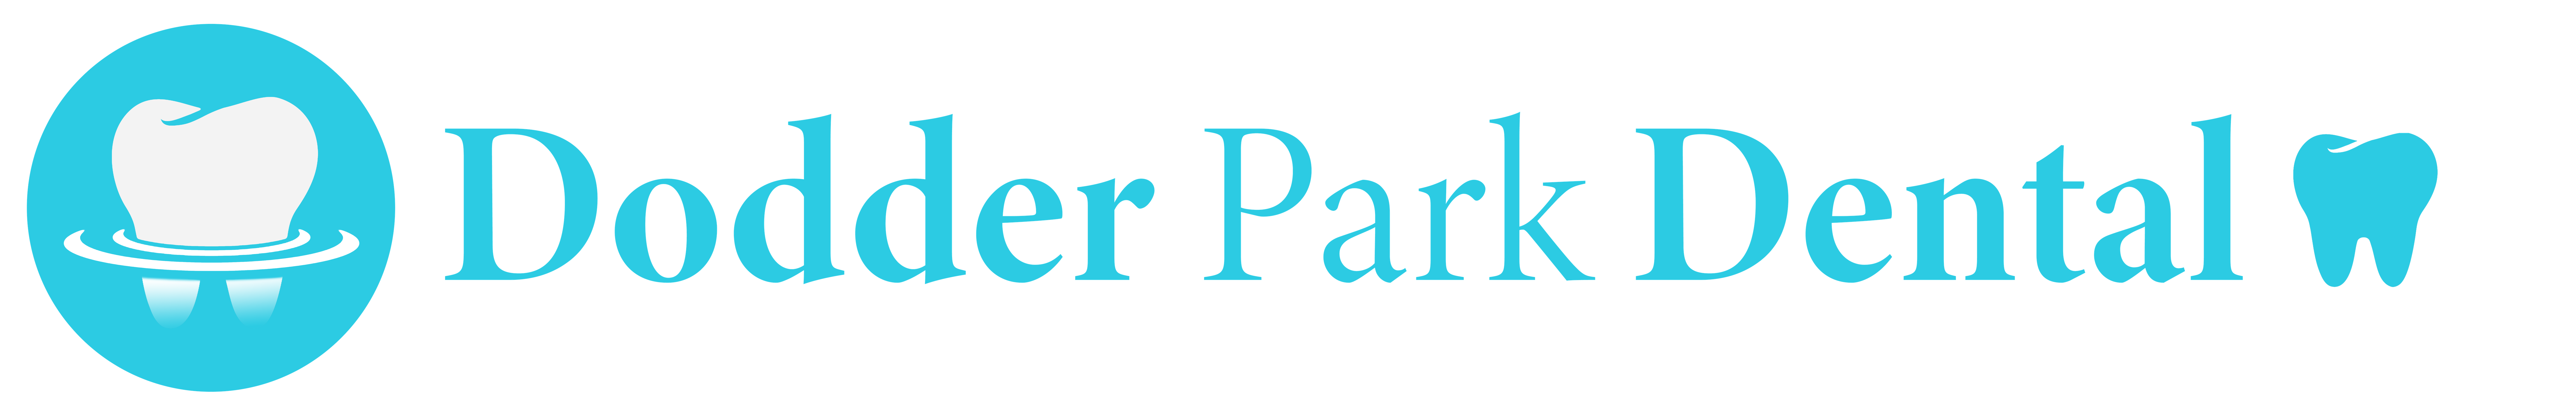 Dodder Park Dental - Logo